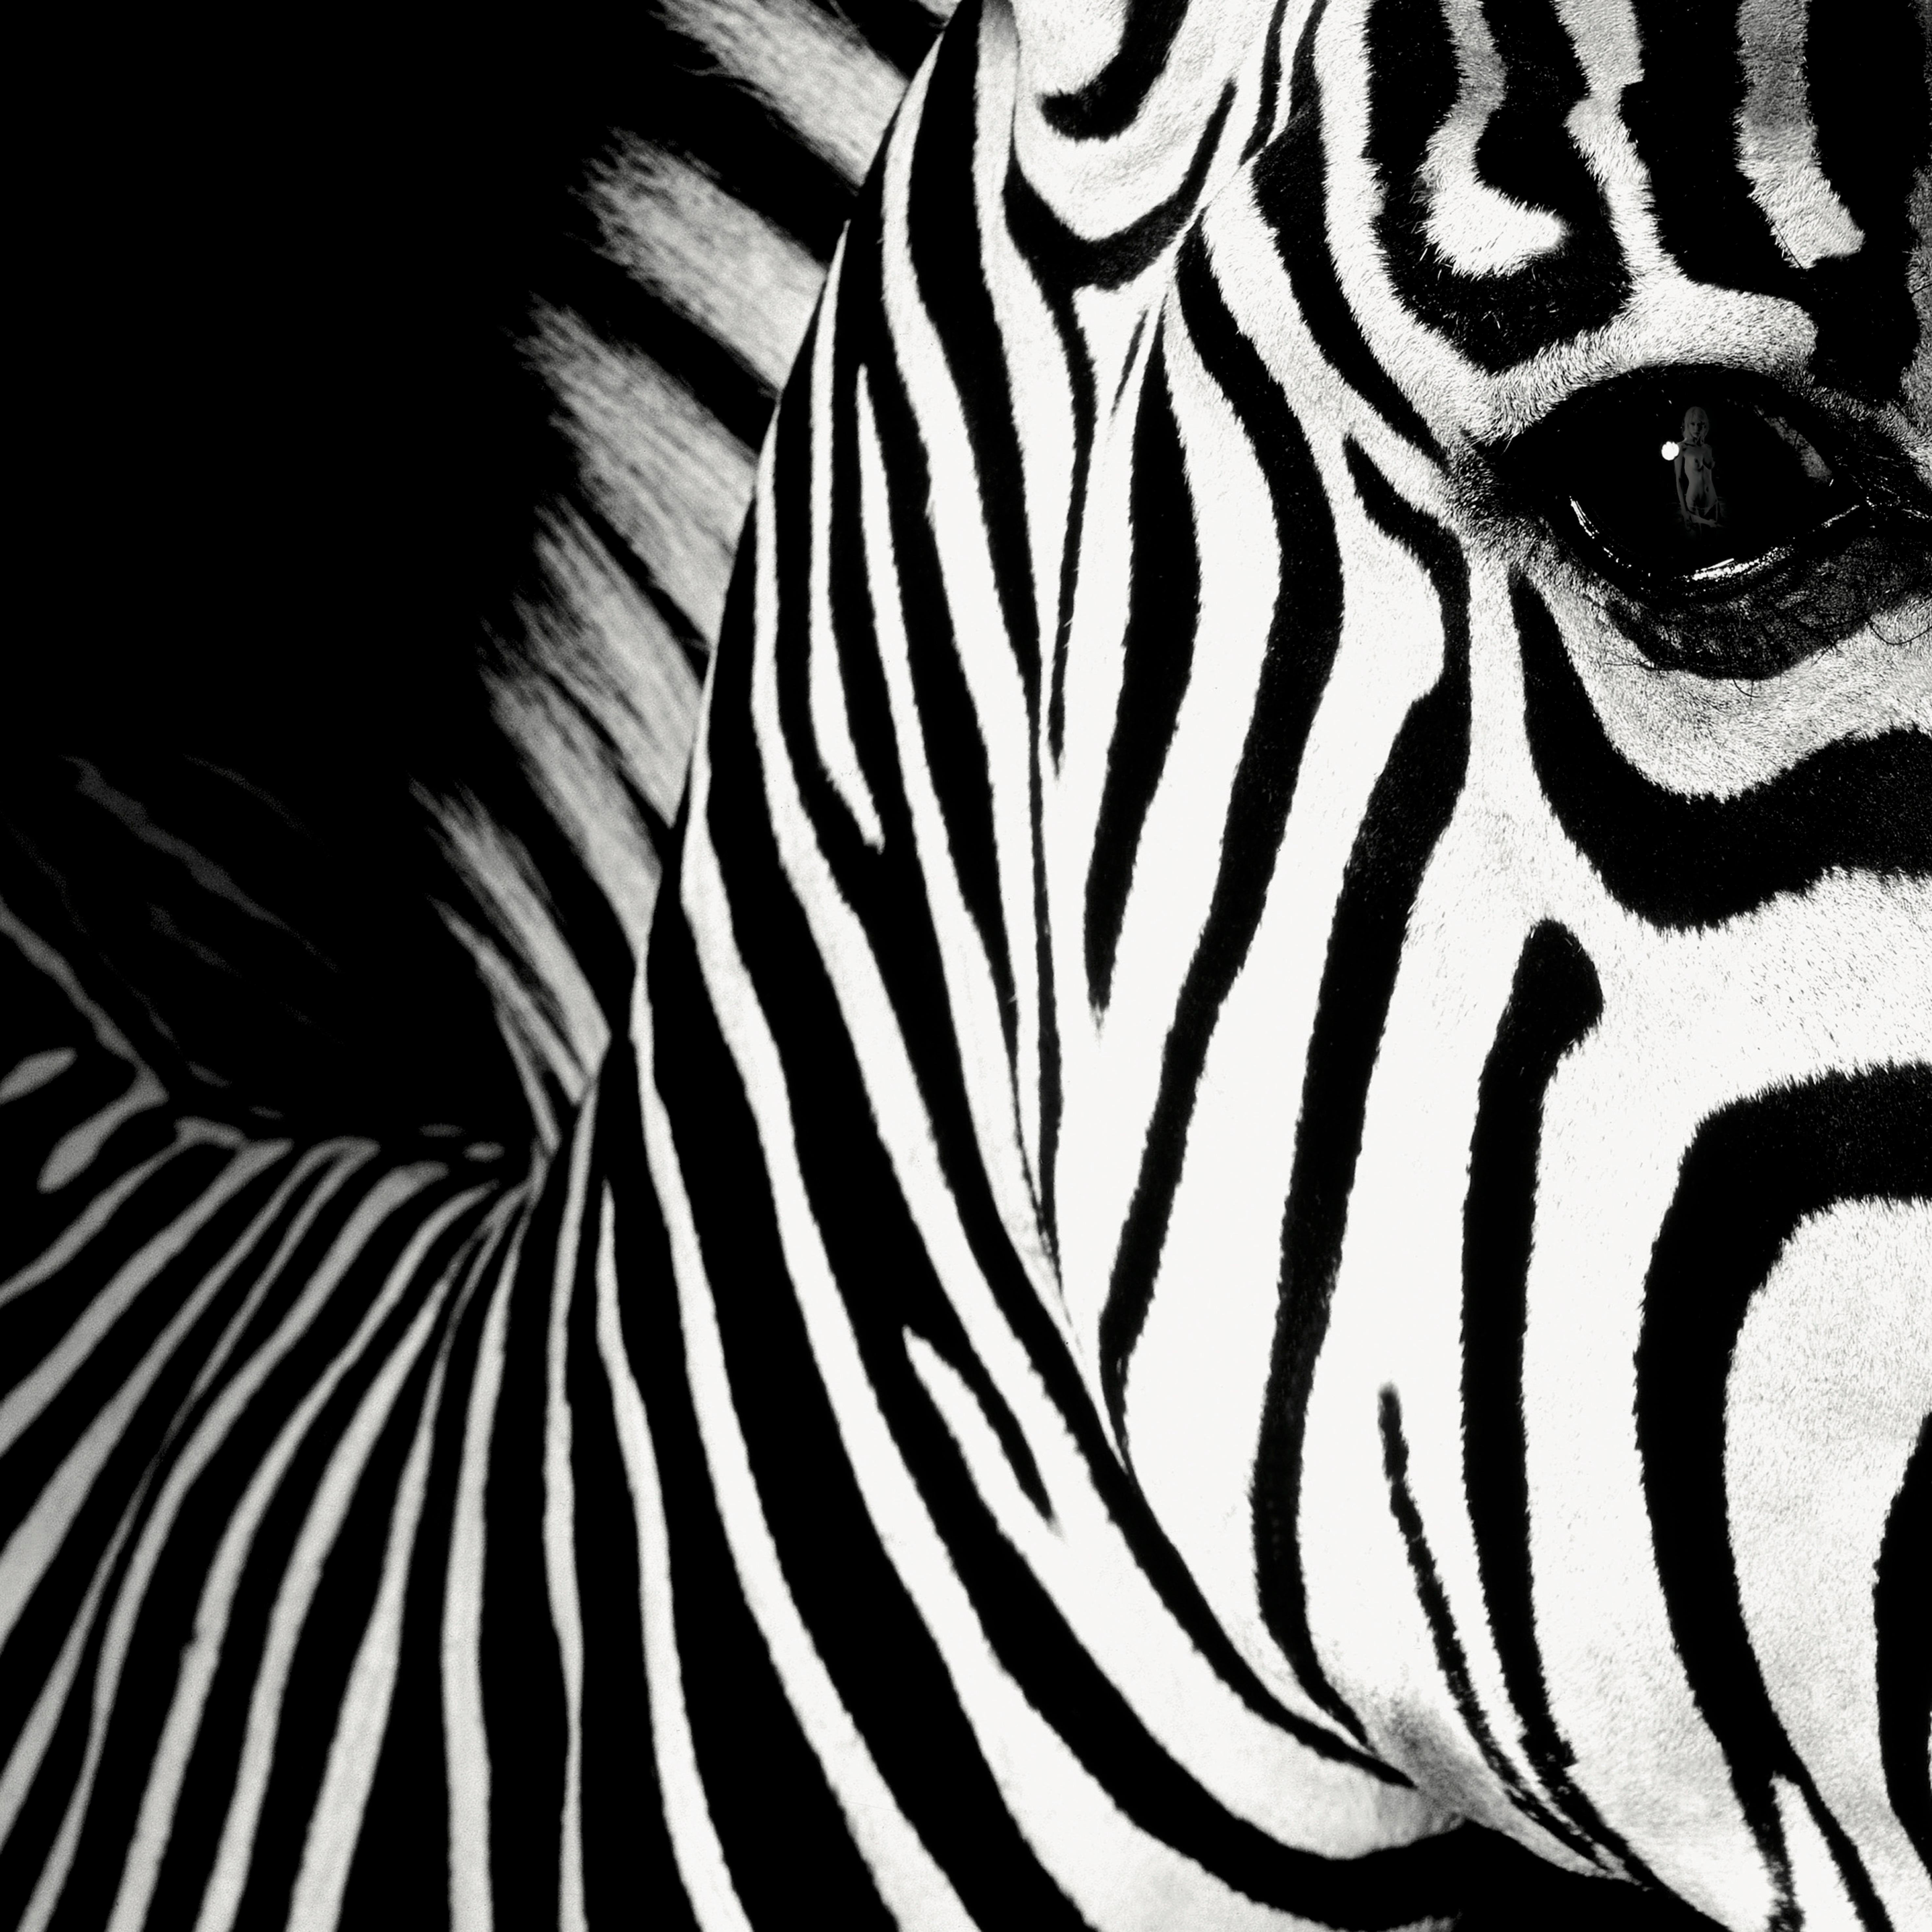 Mauricio Velez Portrait Photograph - Half Angels Half Demons - Zebra #26, Portrait l Black and White Photography